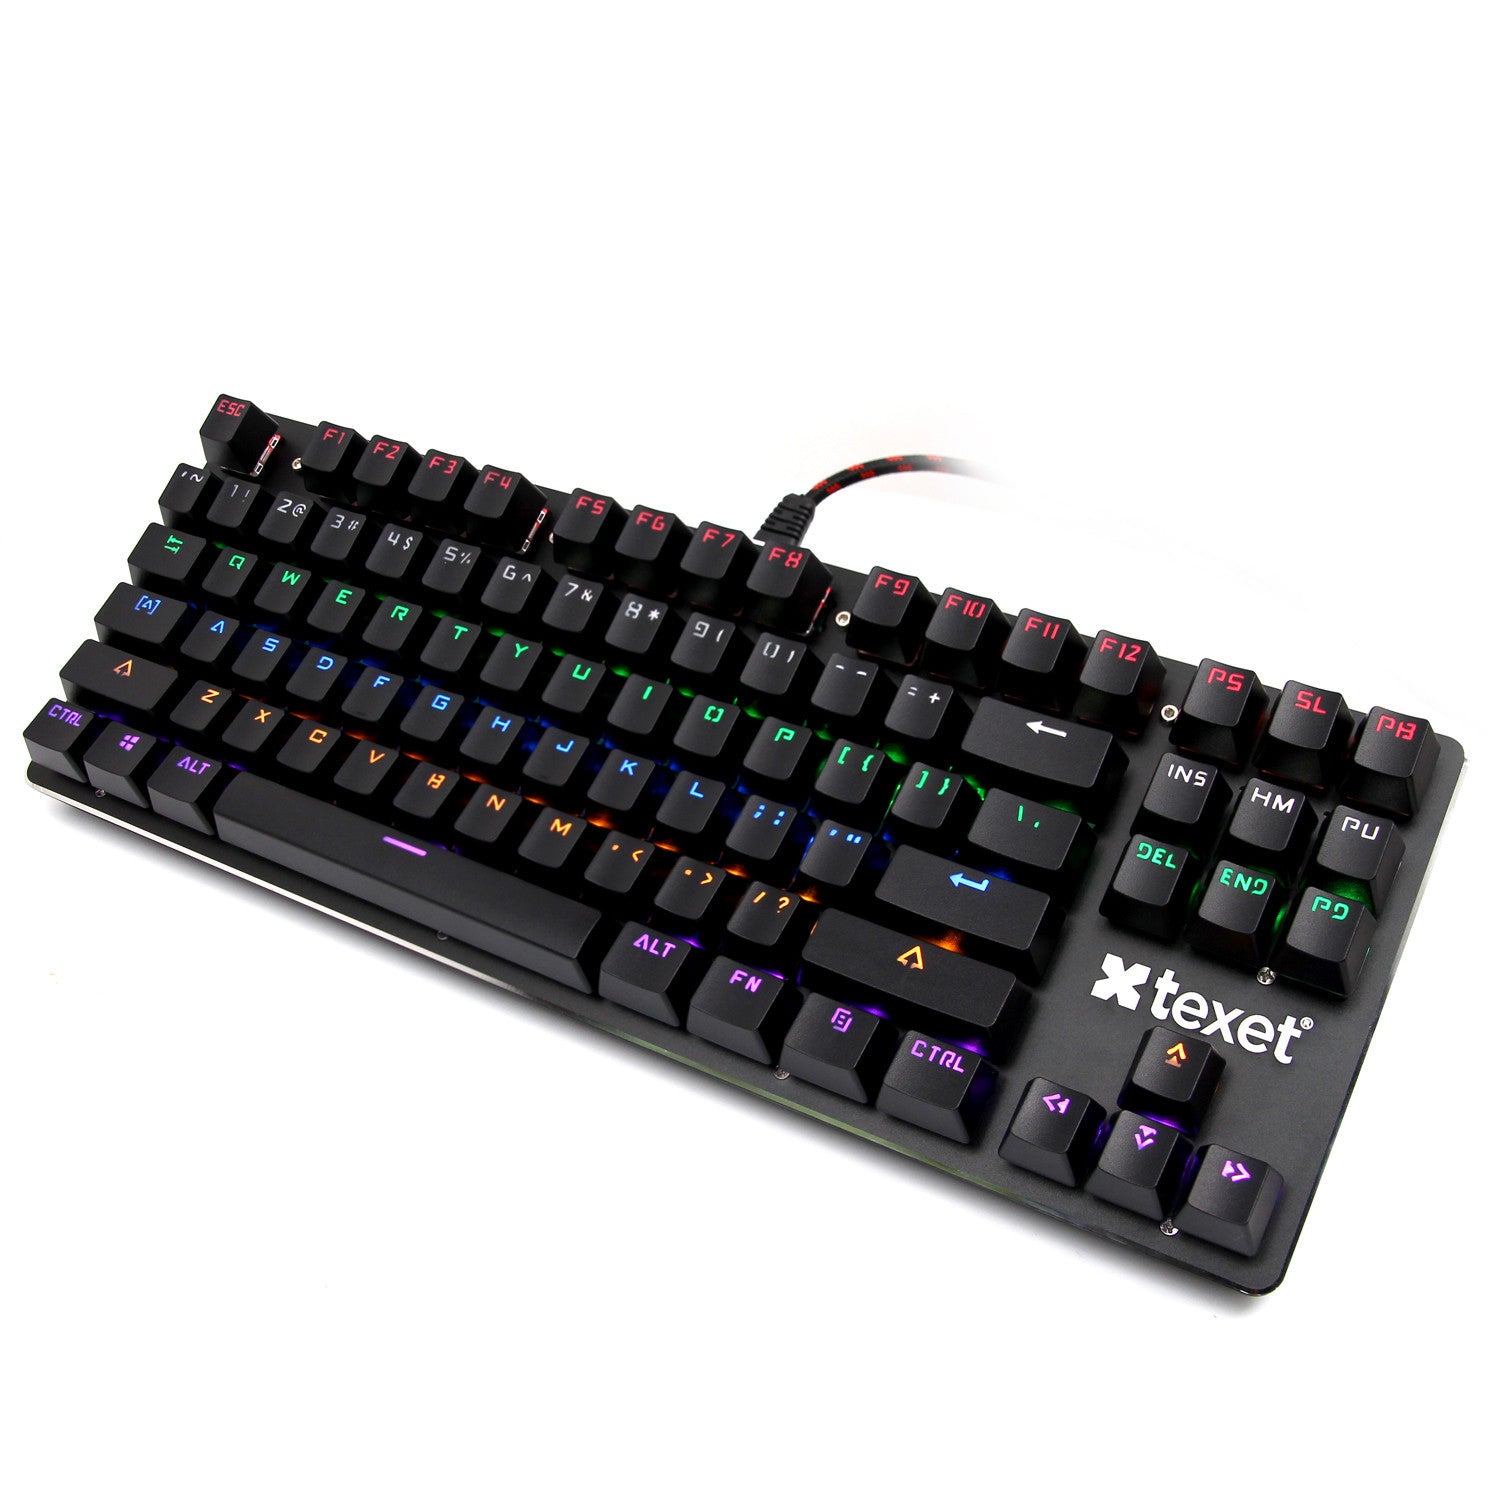 SHIFT FLAMER - Mechanical Gaming Keyboard -87 Keys